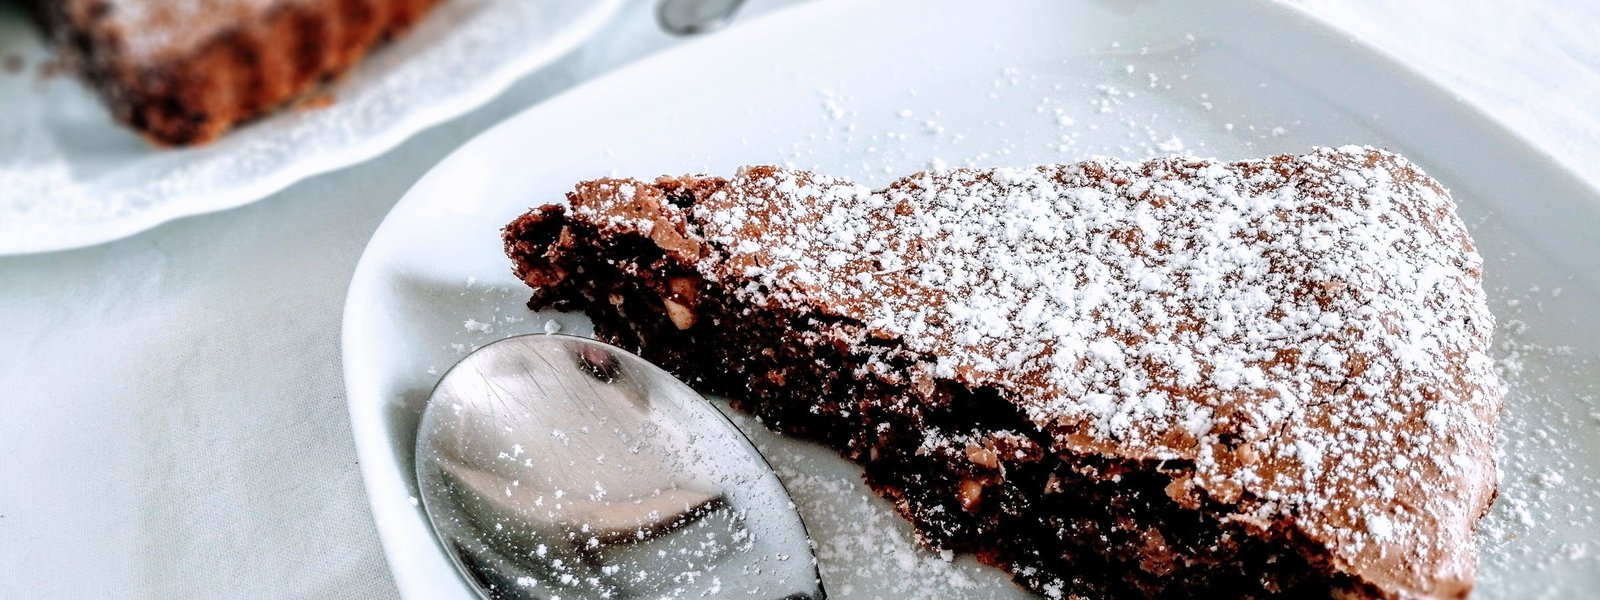 A slice of chocolate hazelnut tart sits on a white plate